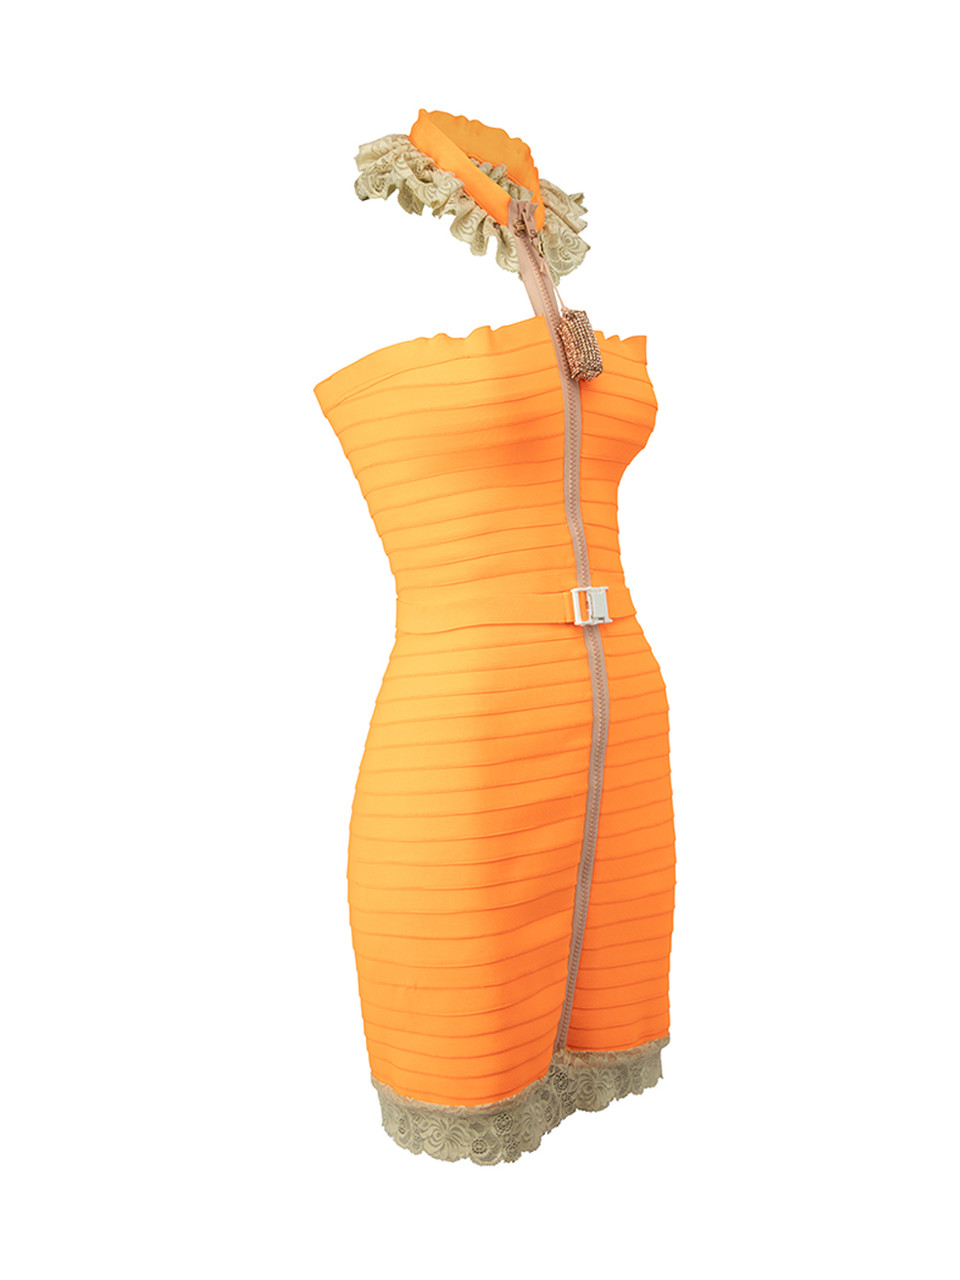 Christopher Kane Orange Spring 2007 Lace Accent Bandage Dress